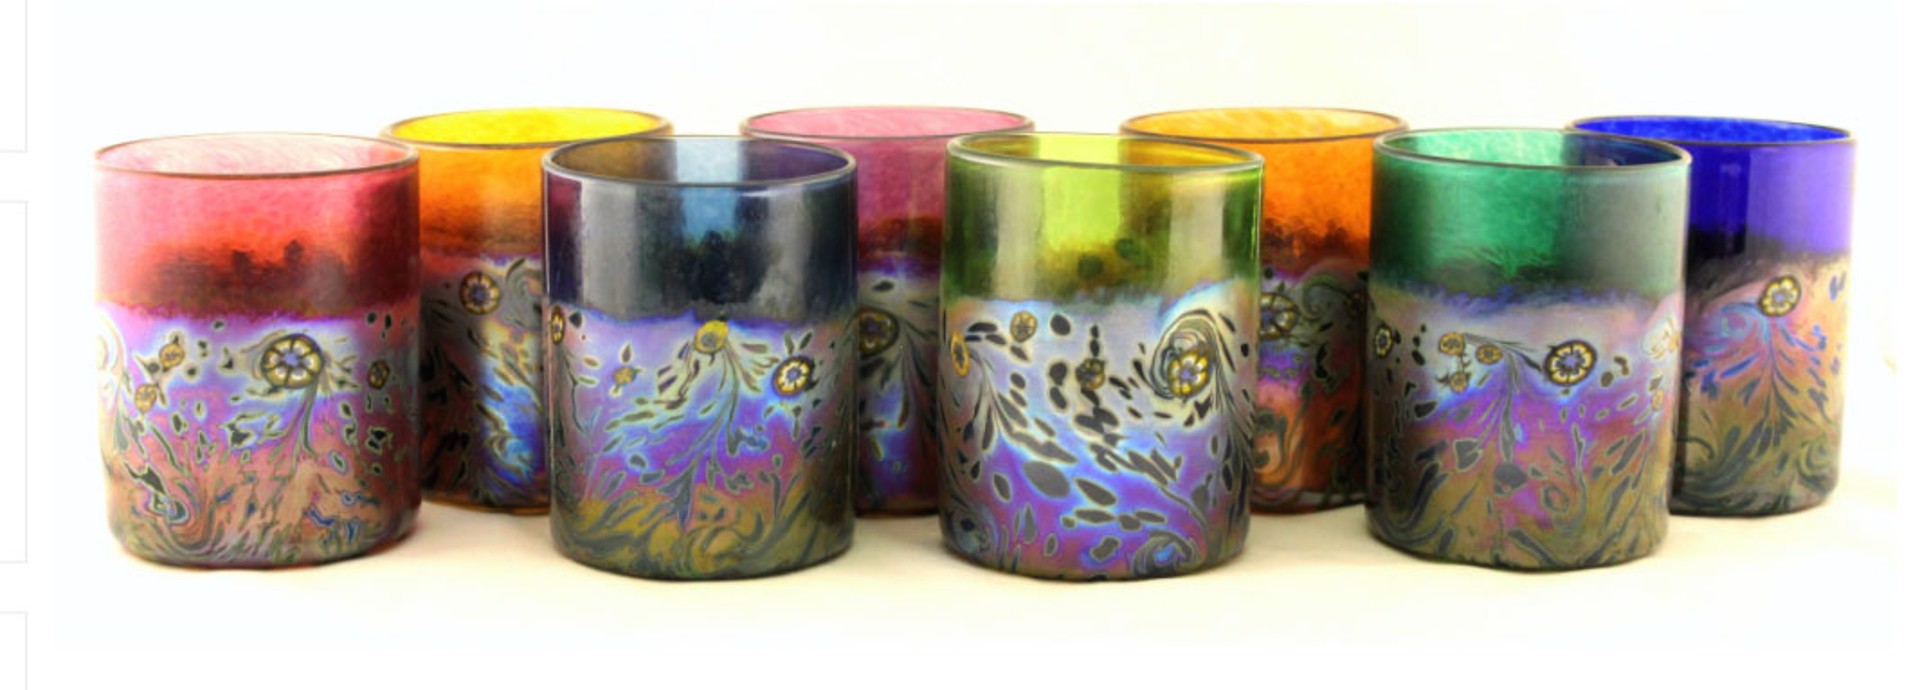 Old Fashioned Monet Glasses Short ~ Set of 8 Assorted Colors by Ken Hanson & Ingrid Hanson